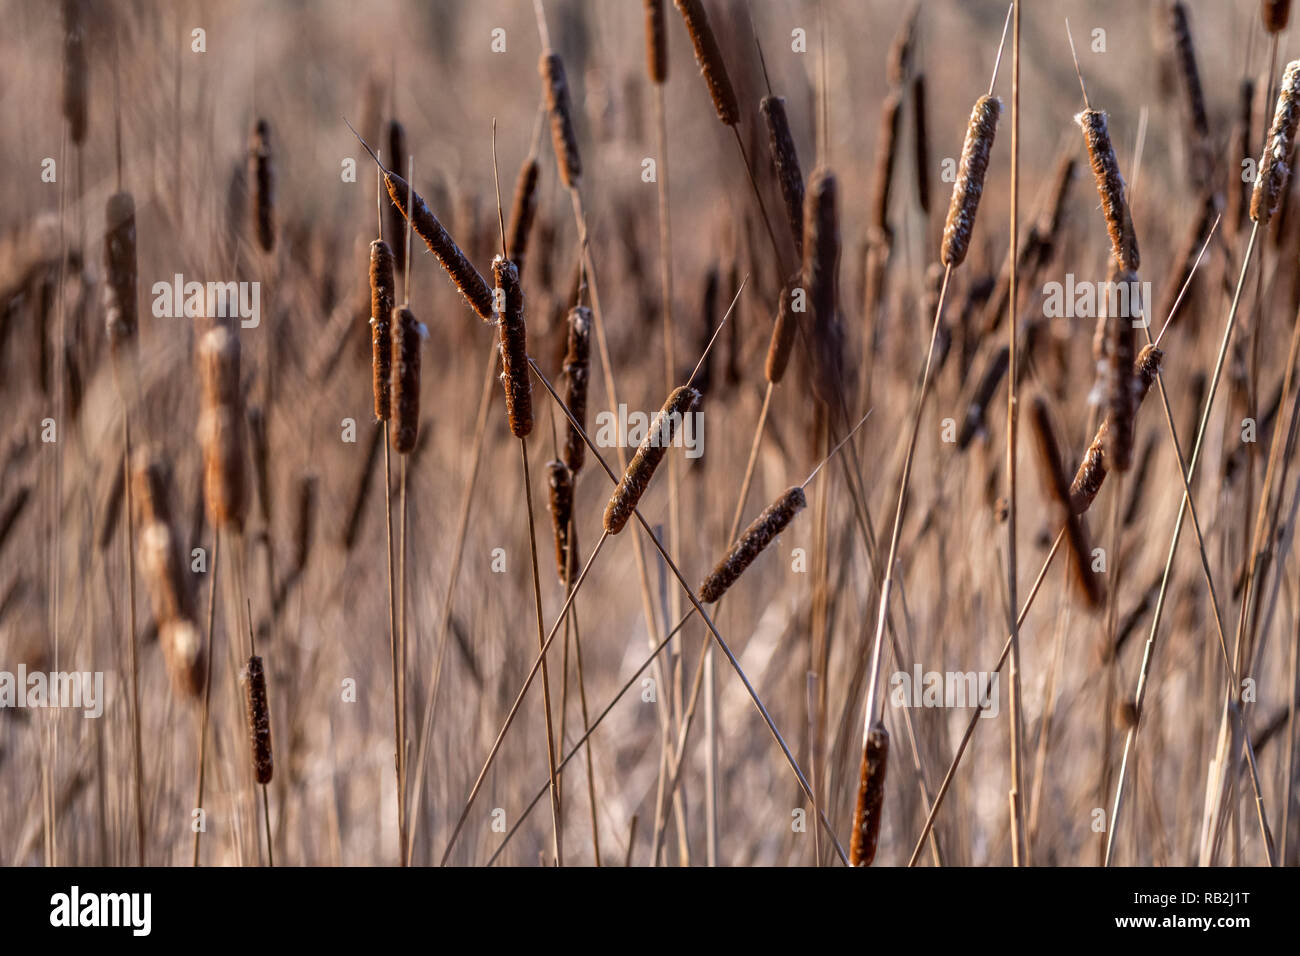 Totoras común (tifus latifolia) en Marsh en invierno. Foto de stock